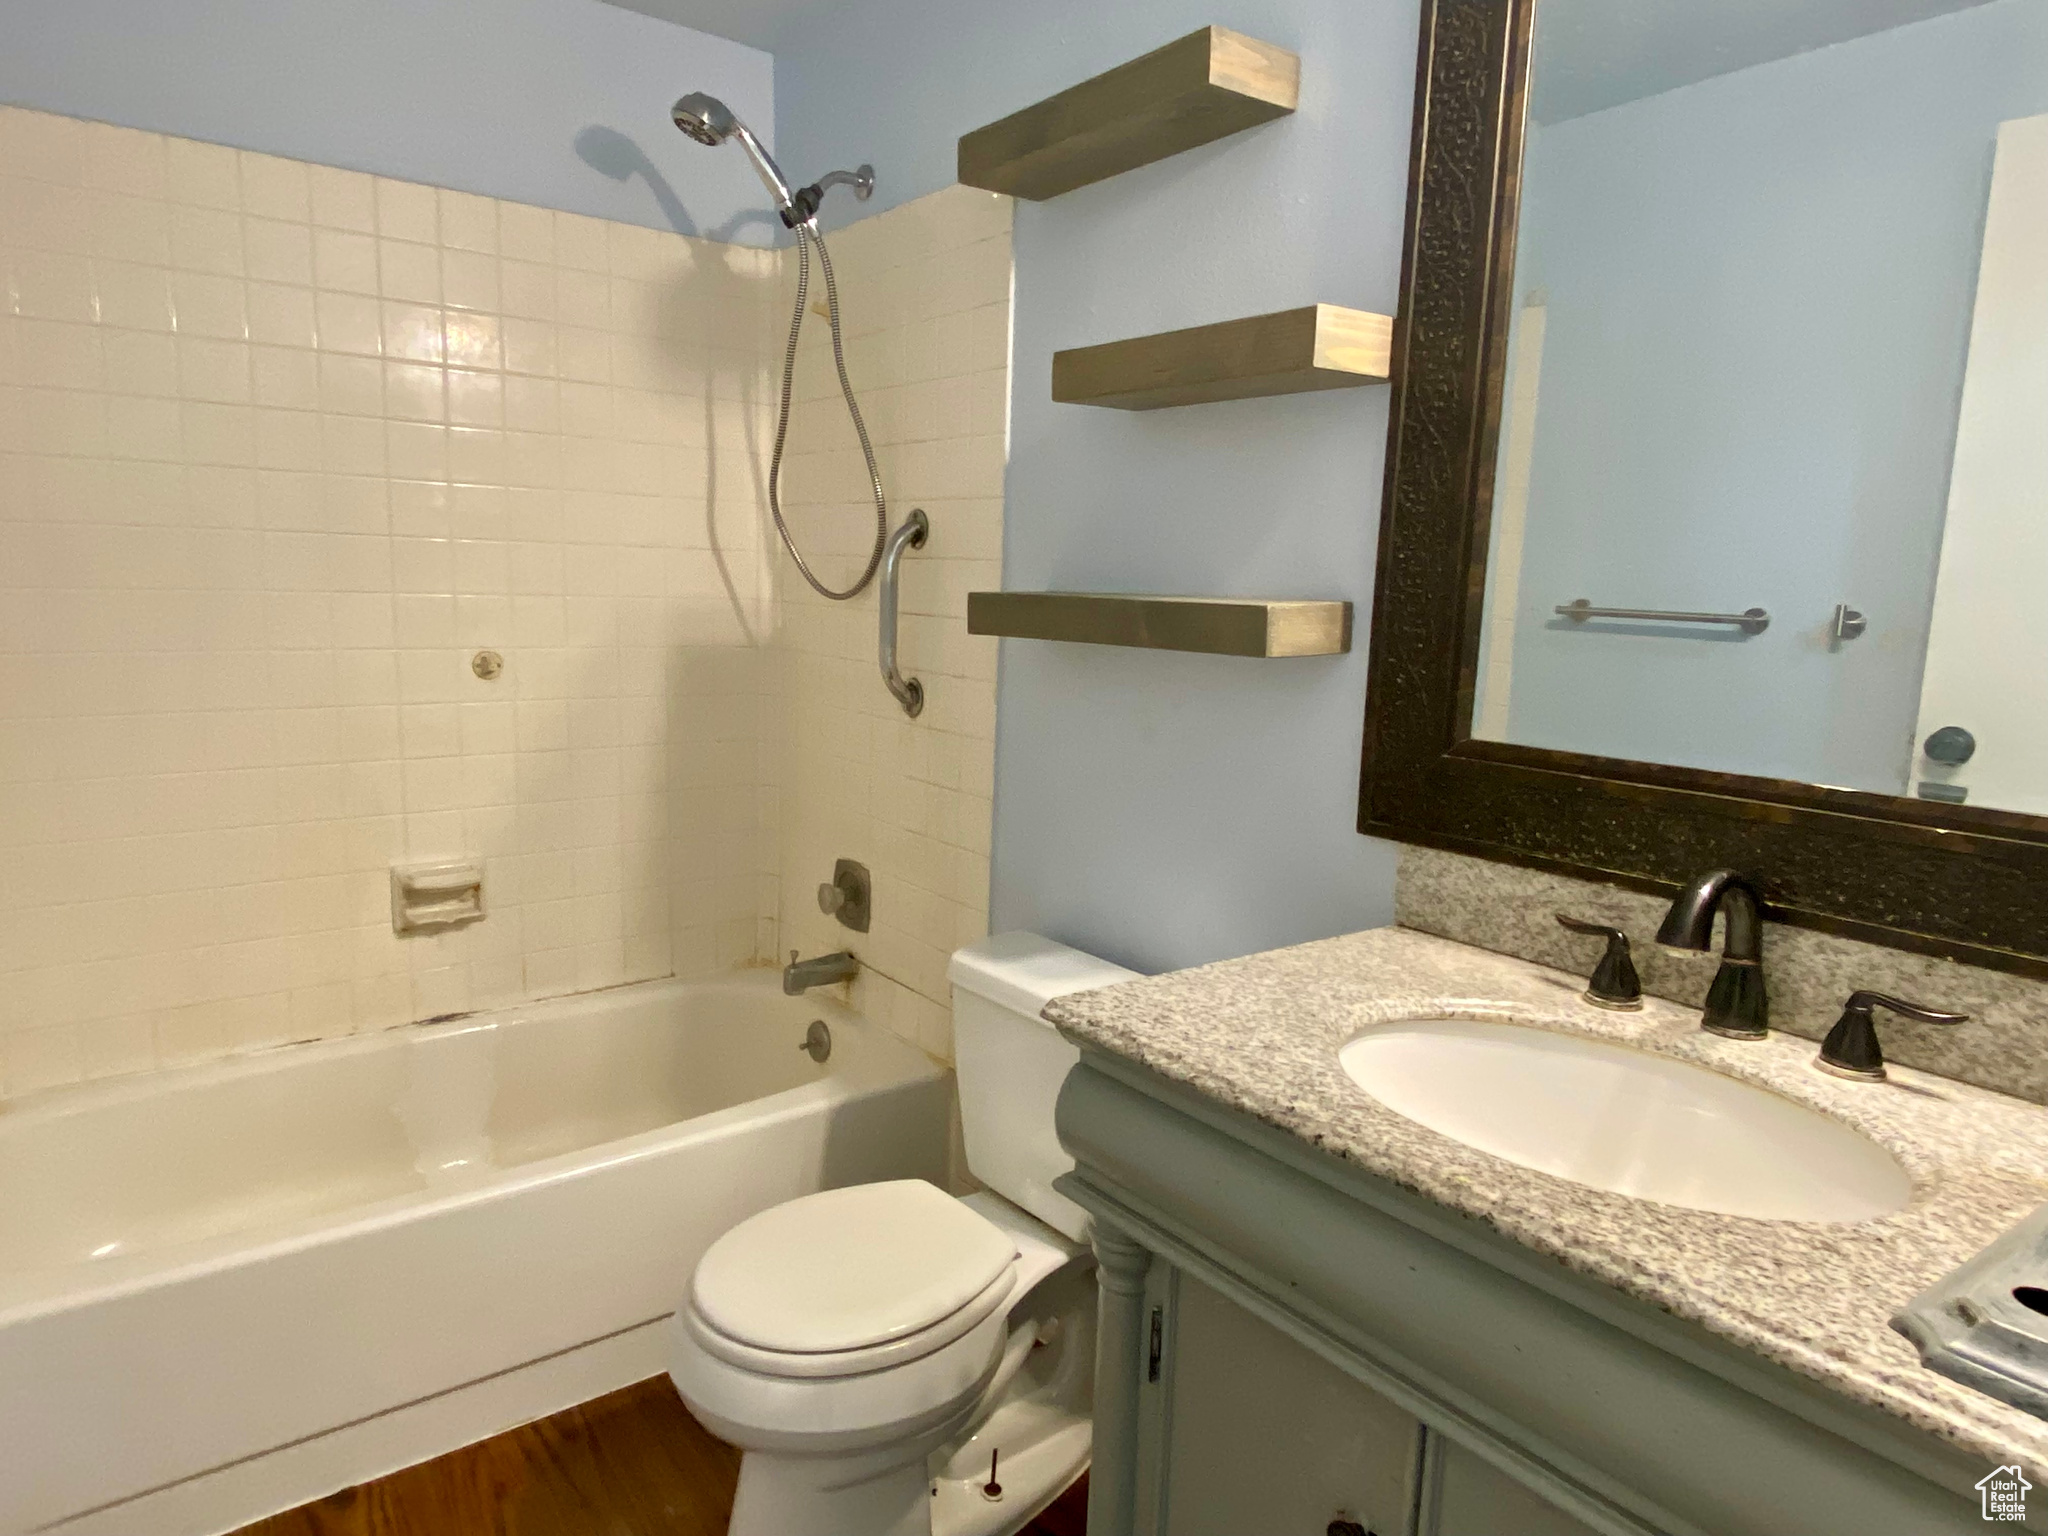 Full bathroom featuring oversized vanity, toilet, tiled shower / bath combo, and hardwood / wood-style floors